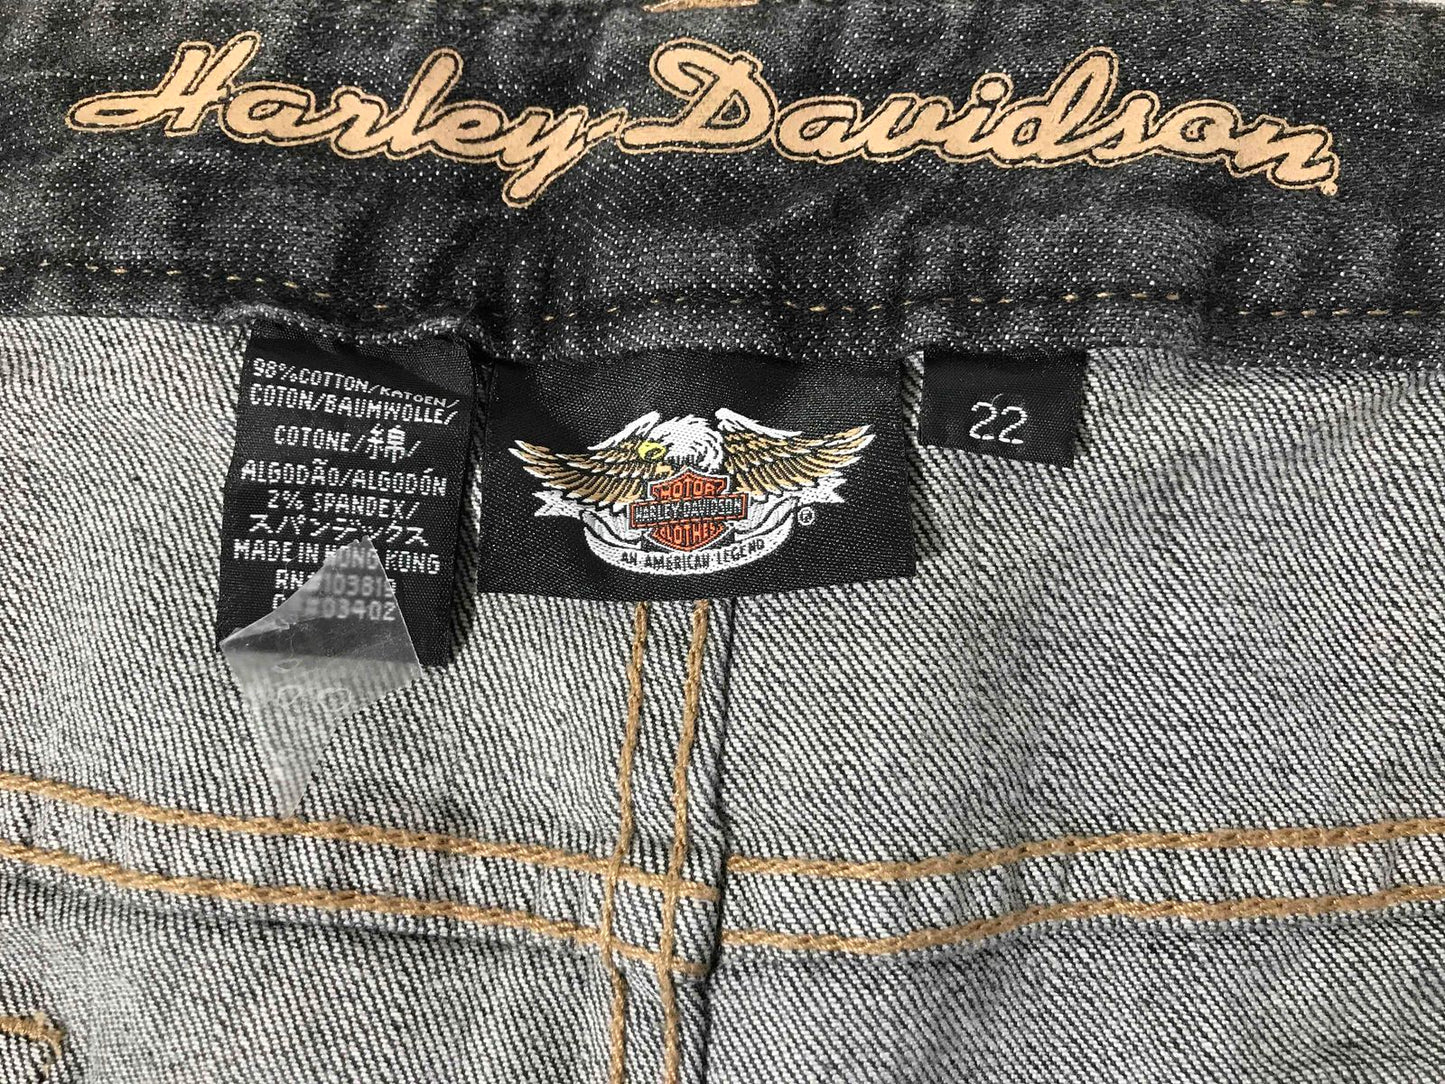 HARLEY DAVIDSON Women’s Jeans Size 22